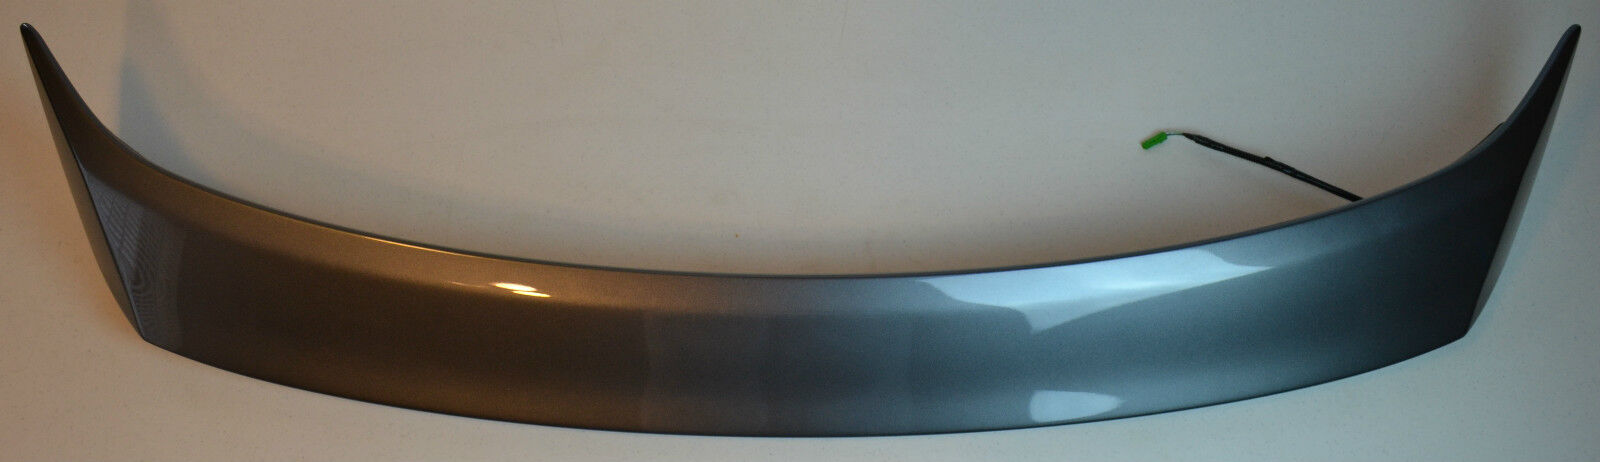 OEM Acura 2009-2010 TSX Rear Wing Trunk Spoiler Polished Metal Gray Rear Back